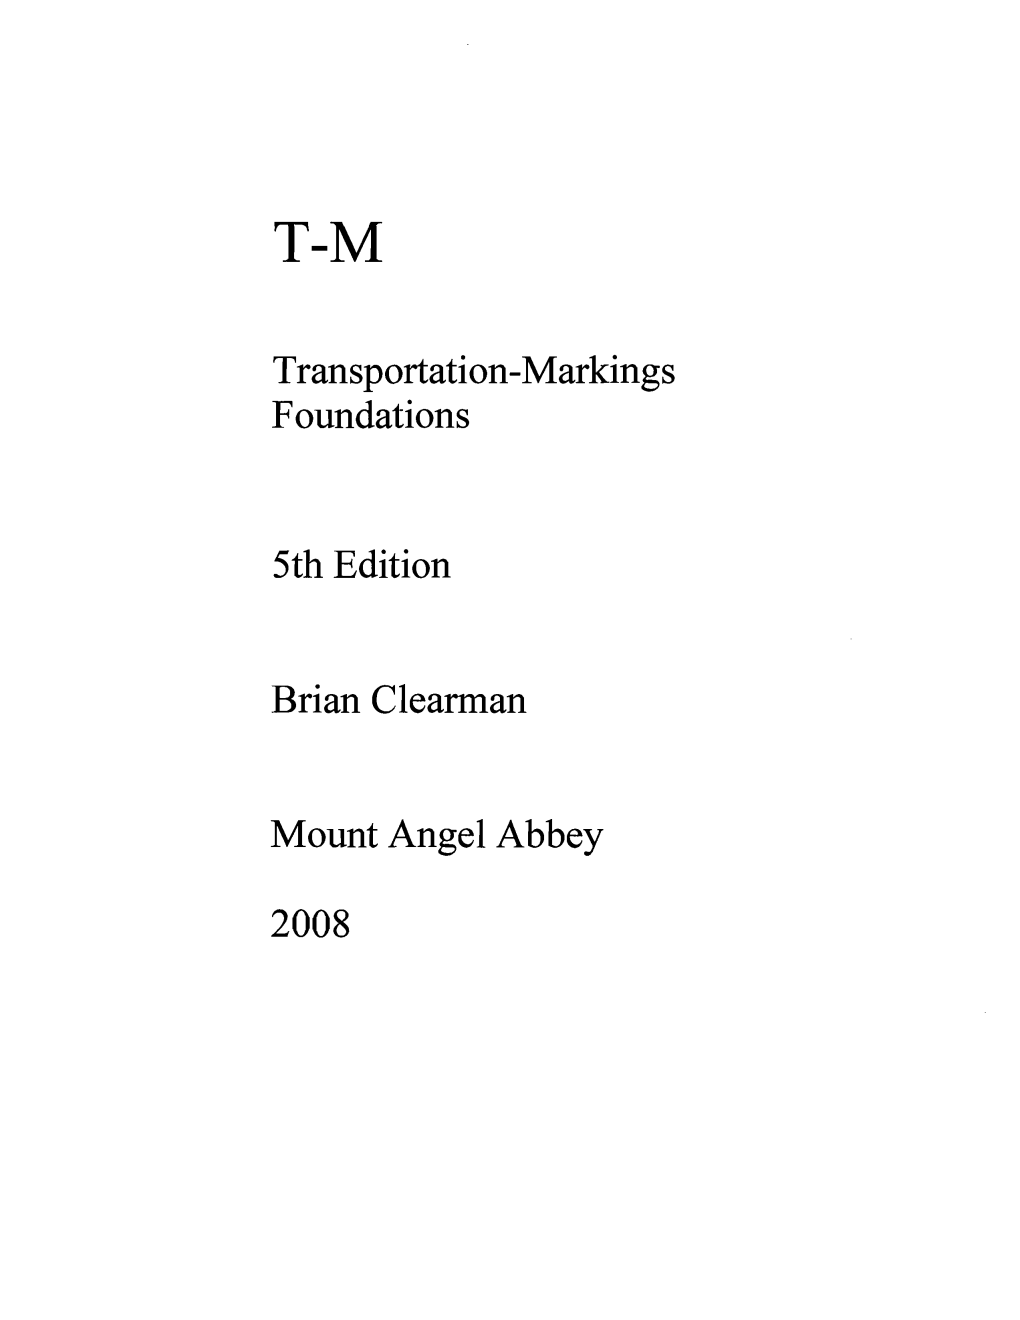 Transportation-Markings Foundations 5Th Edition Brian Clearman Mount